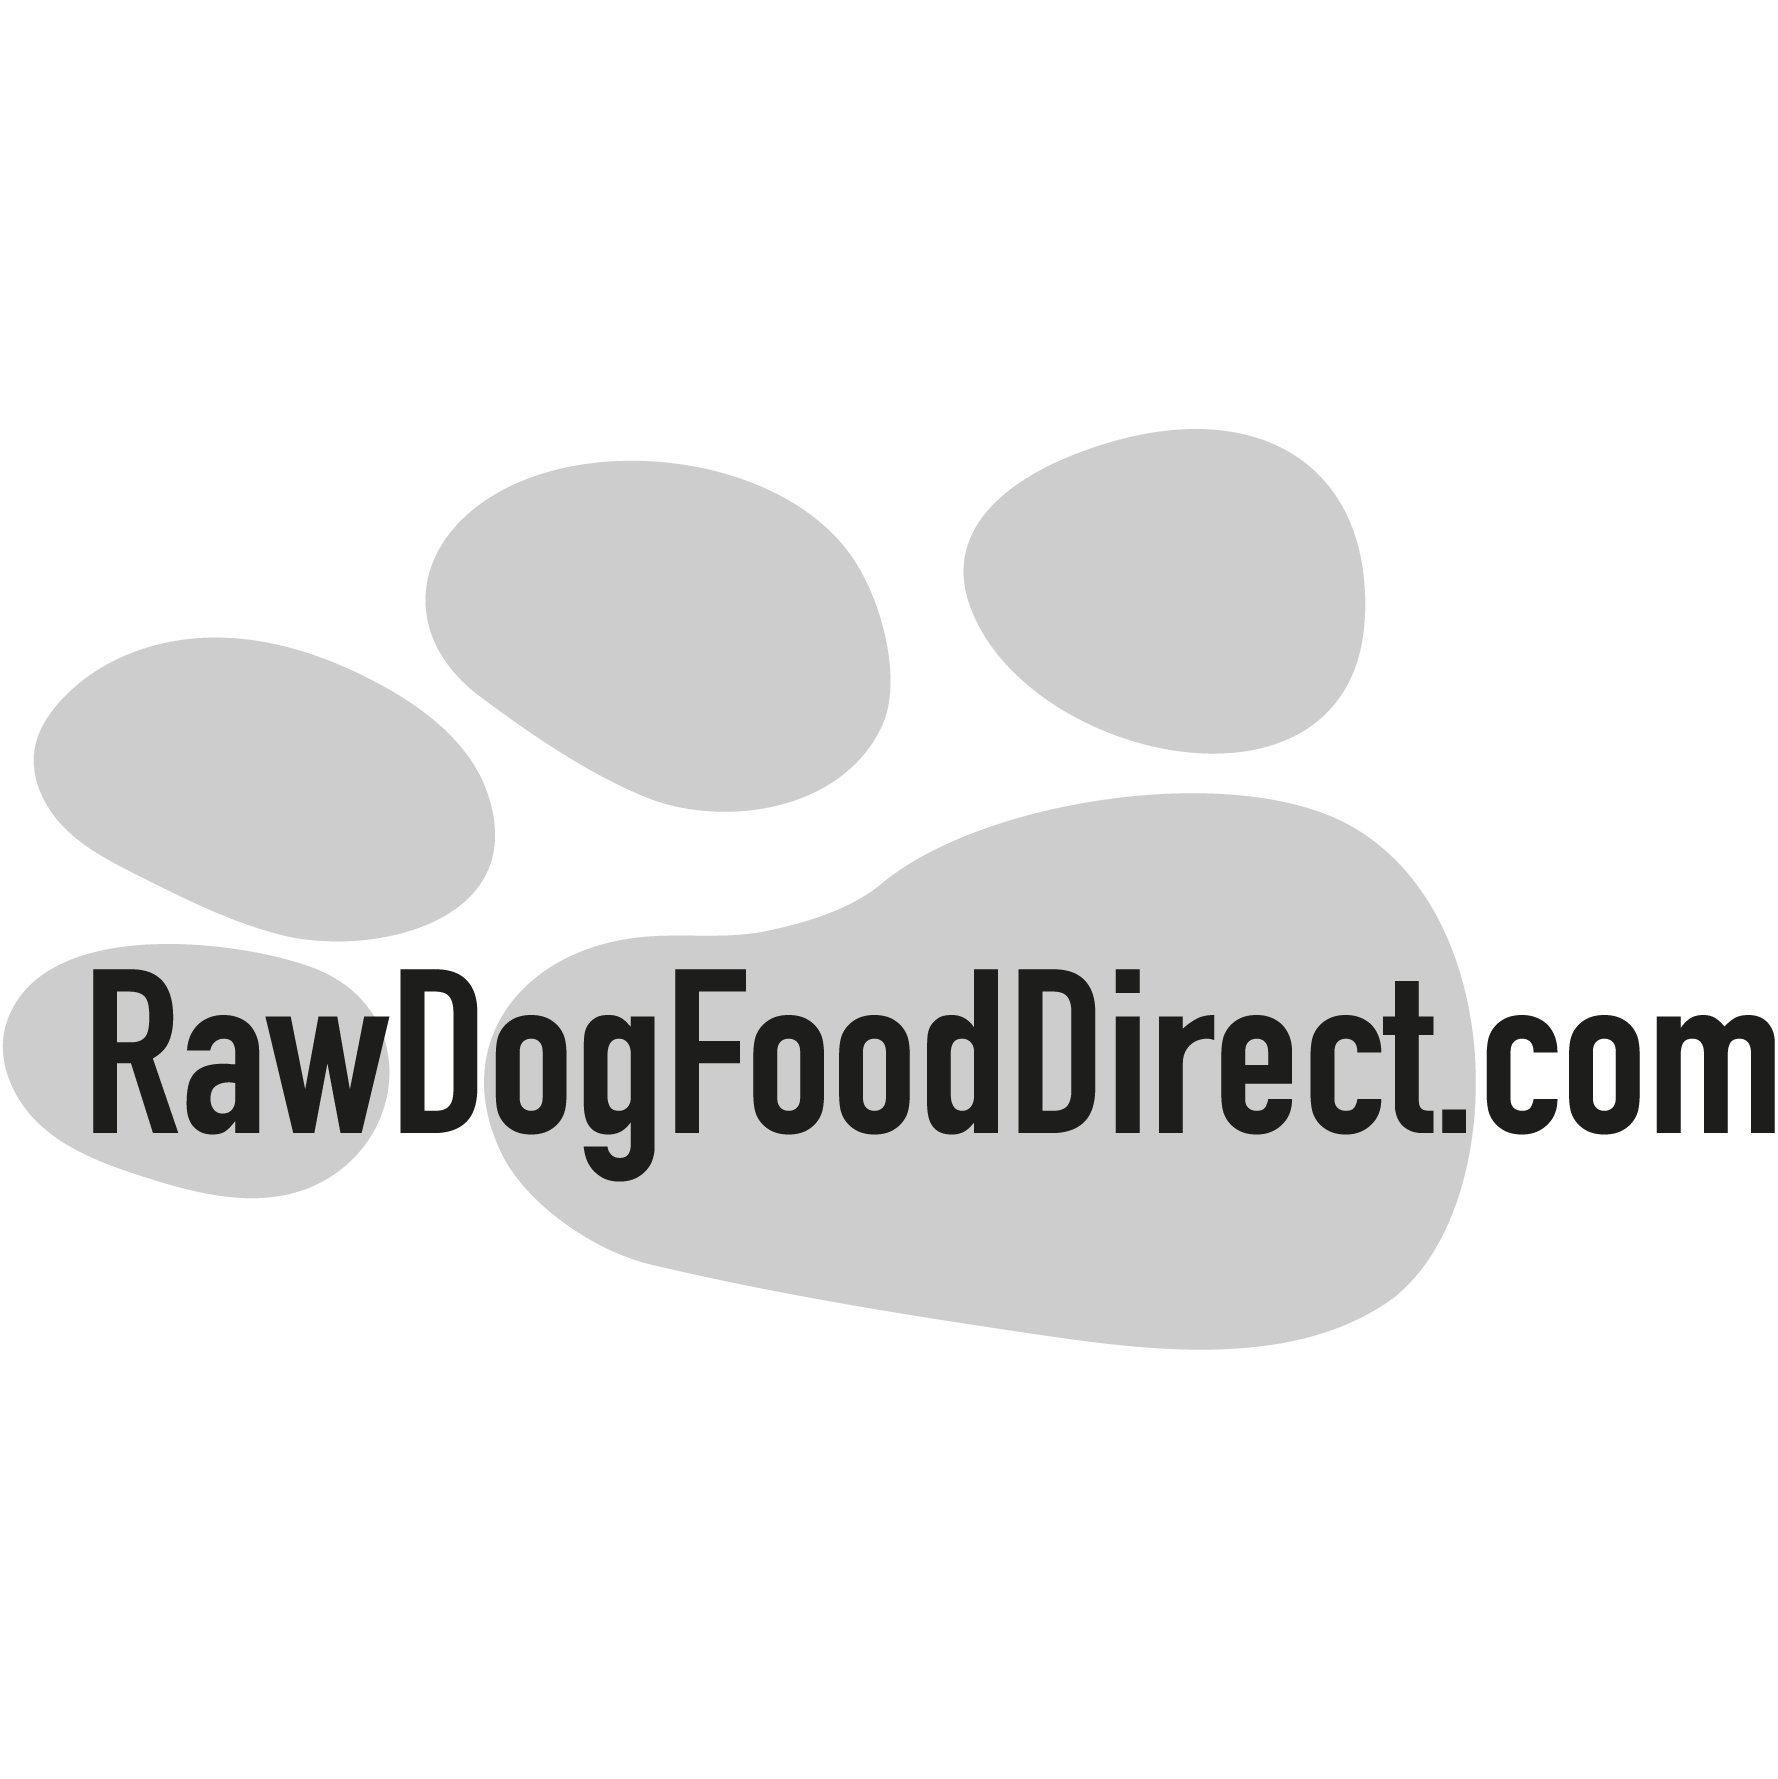 Raw Dog Food Direct